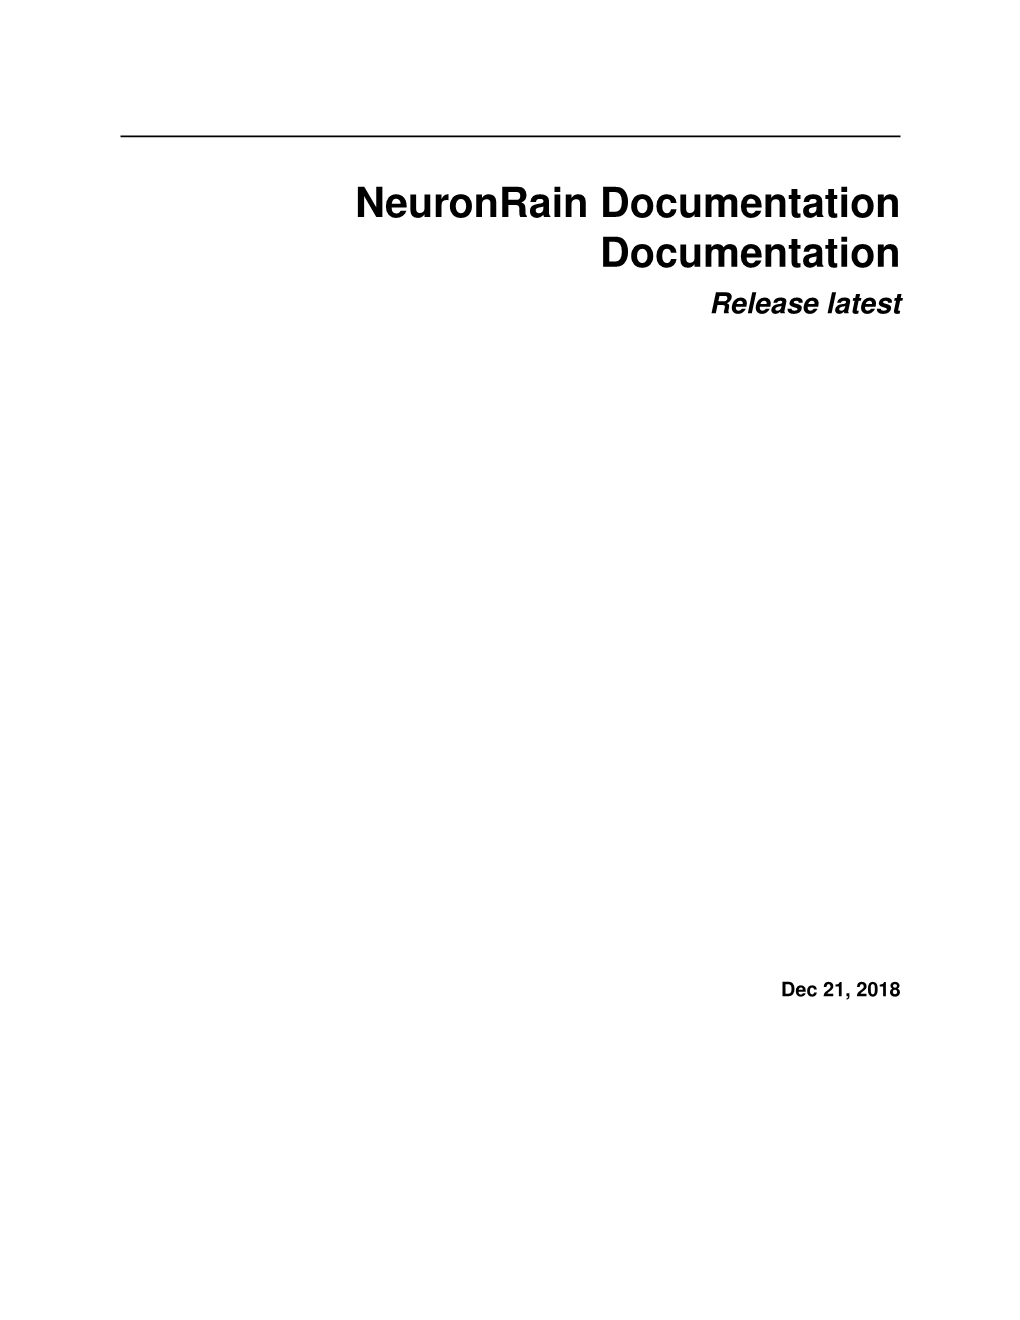 Neuronrain-Documentation.Pdf